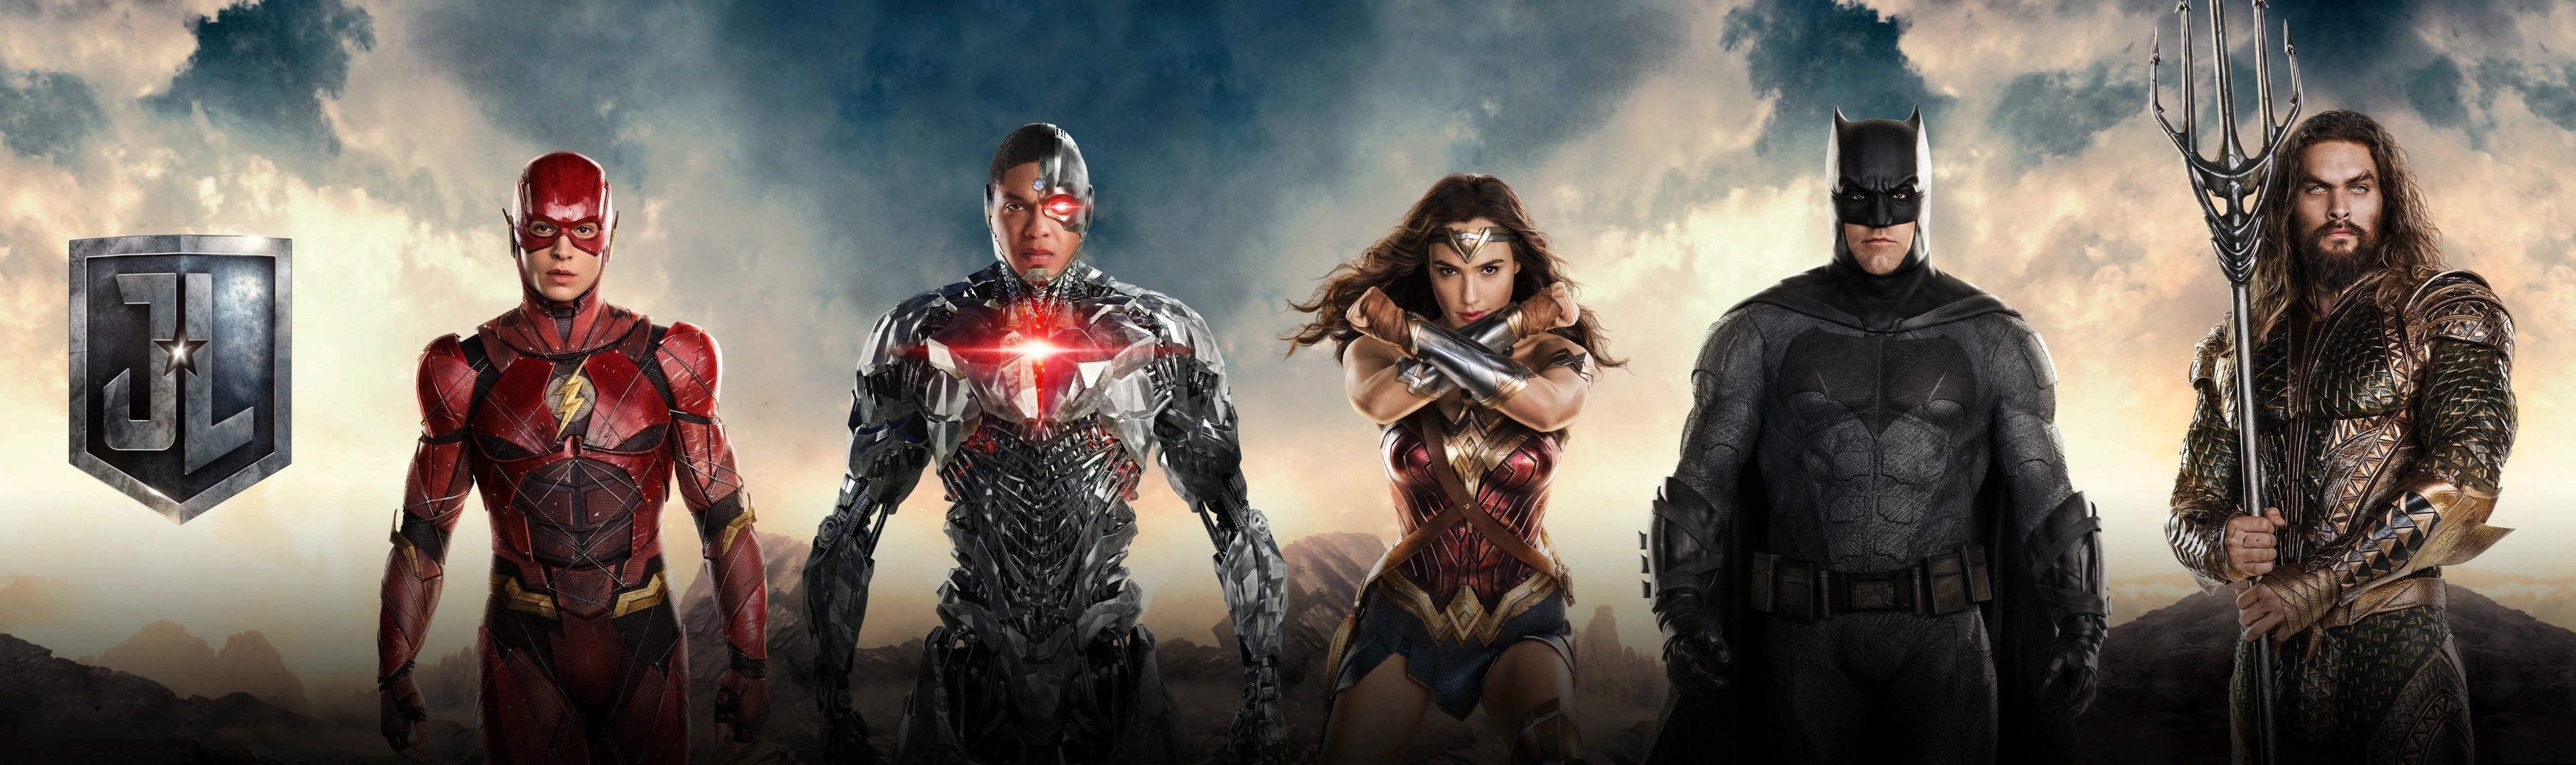 Justice League, 4K HD desktop wallpaper, Wonder Woman, Marvel and DC superheroes, 3840x1140 Dual Screen Desktop